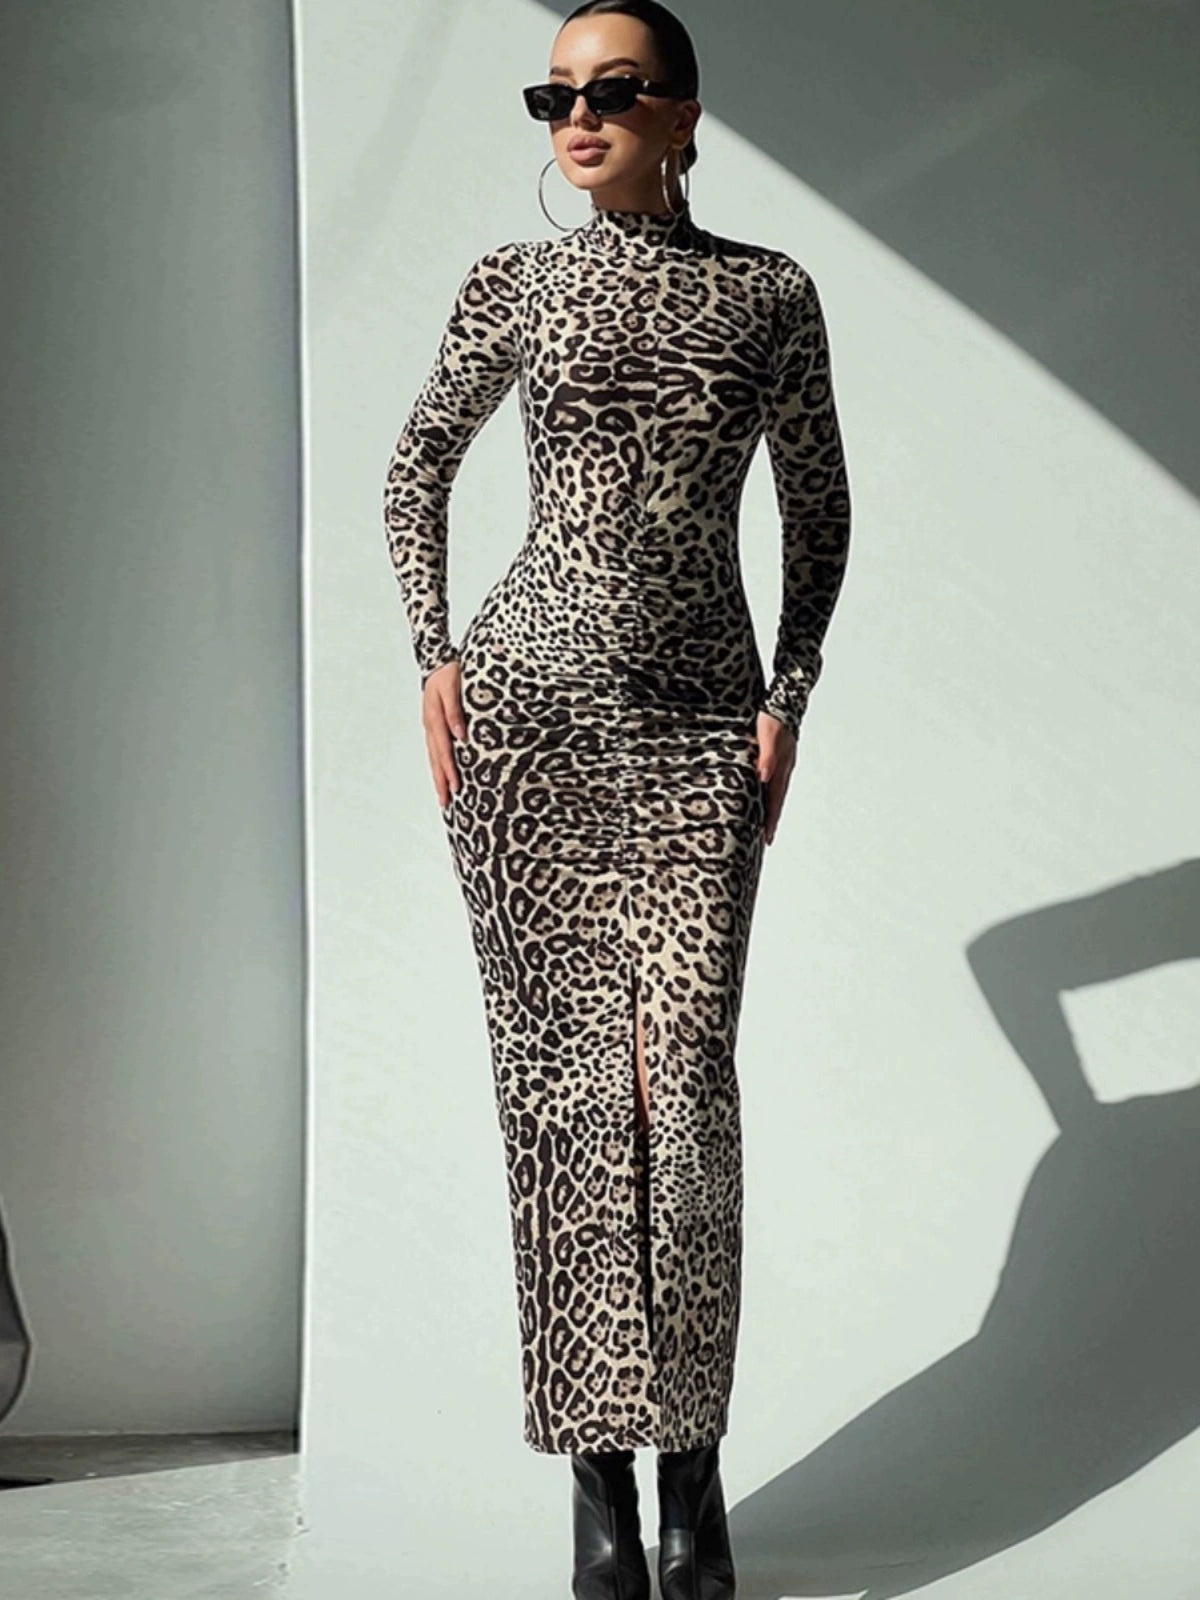 Leopard Print Dress: Chic Waist-Trim Fashion for Stylish Statement